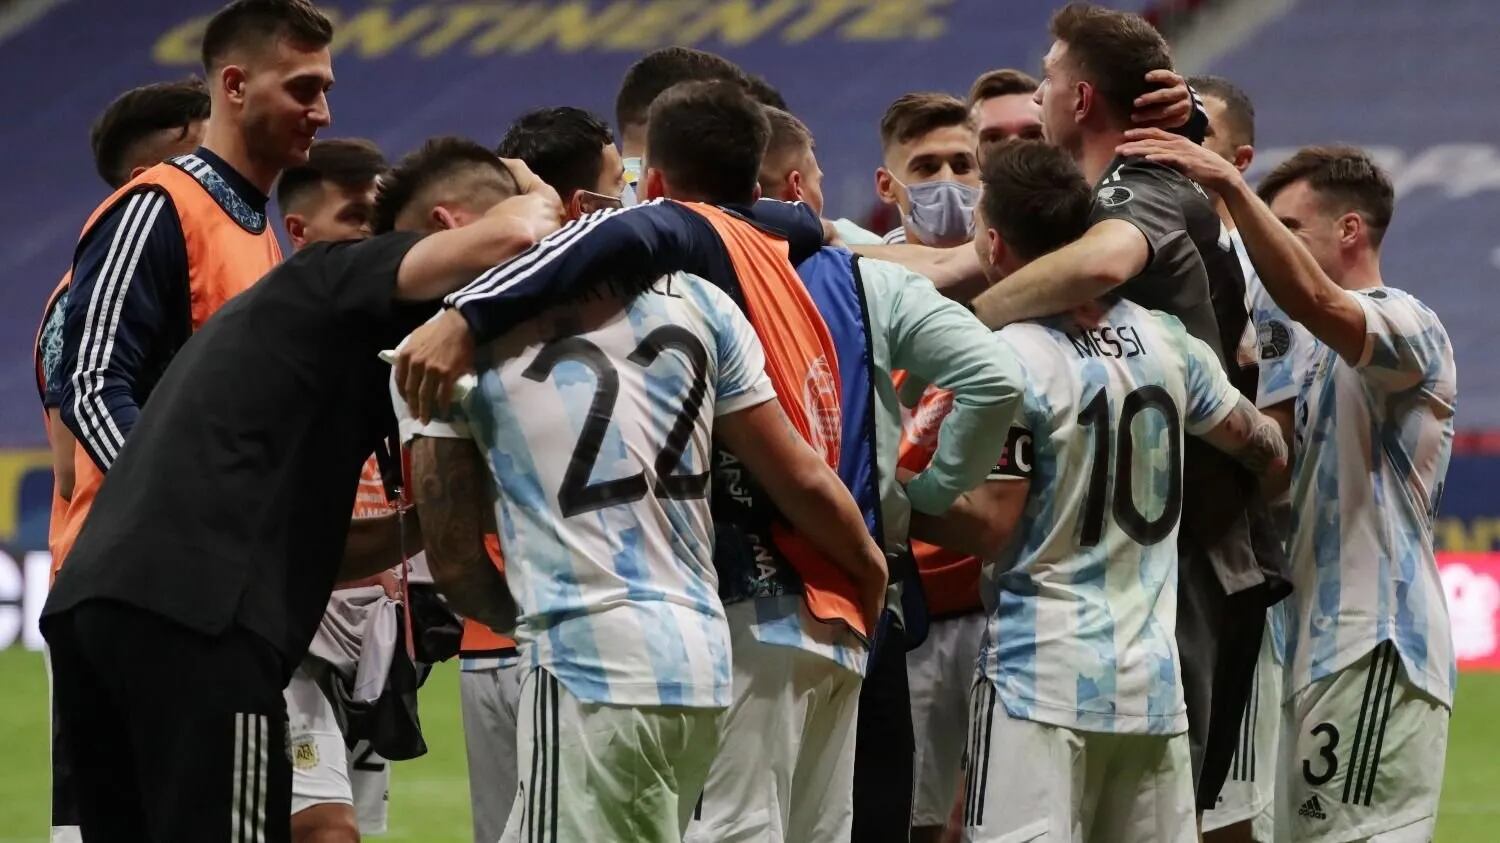 Cuántos puntos le faltan a la Selección argentina para clasificarse a Qatar 2022